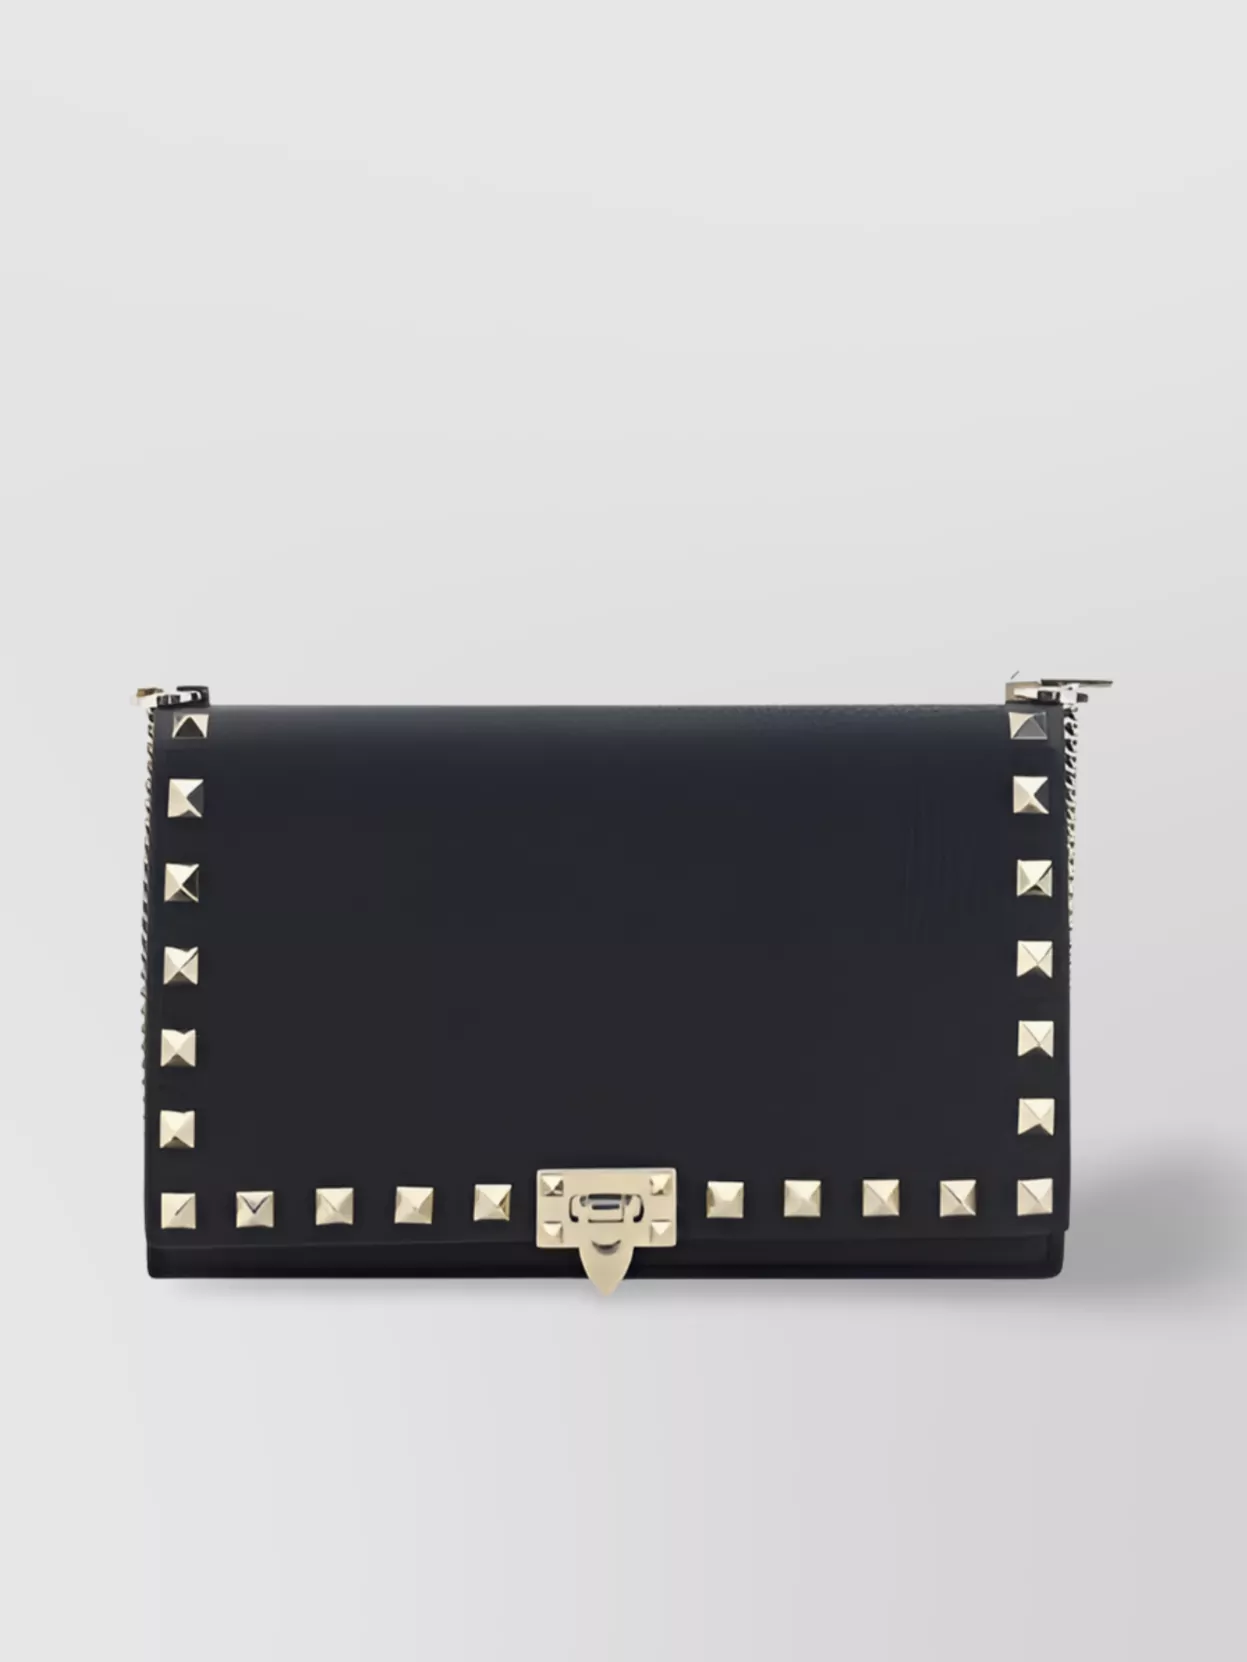 Valentino Garavani Rockstud Grained Leather Handbag Chain In Black